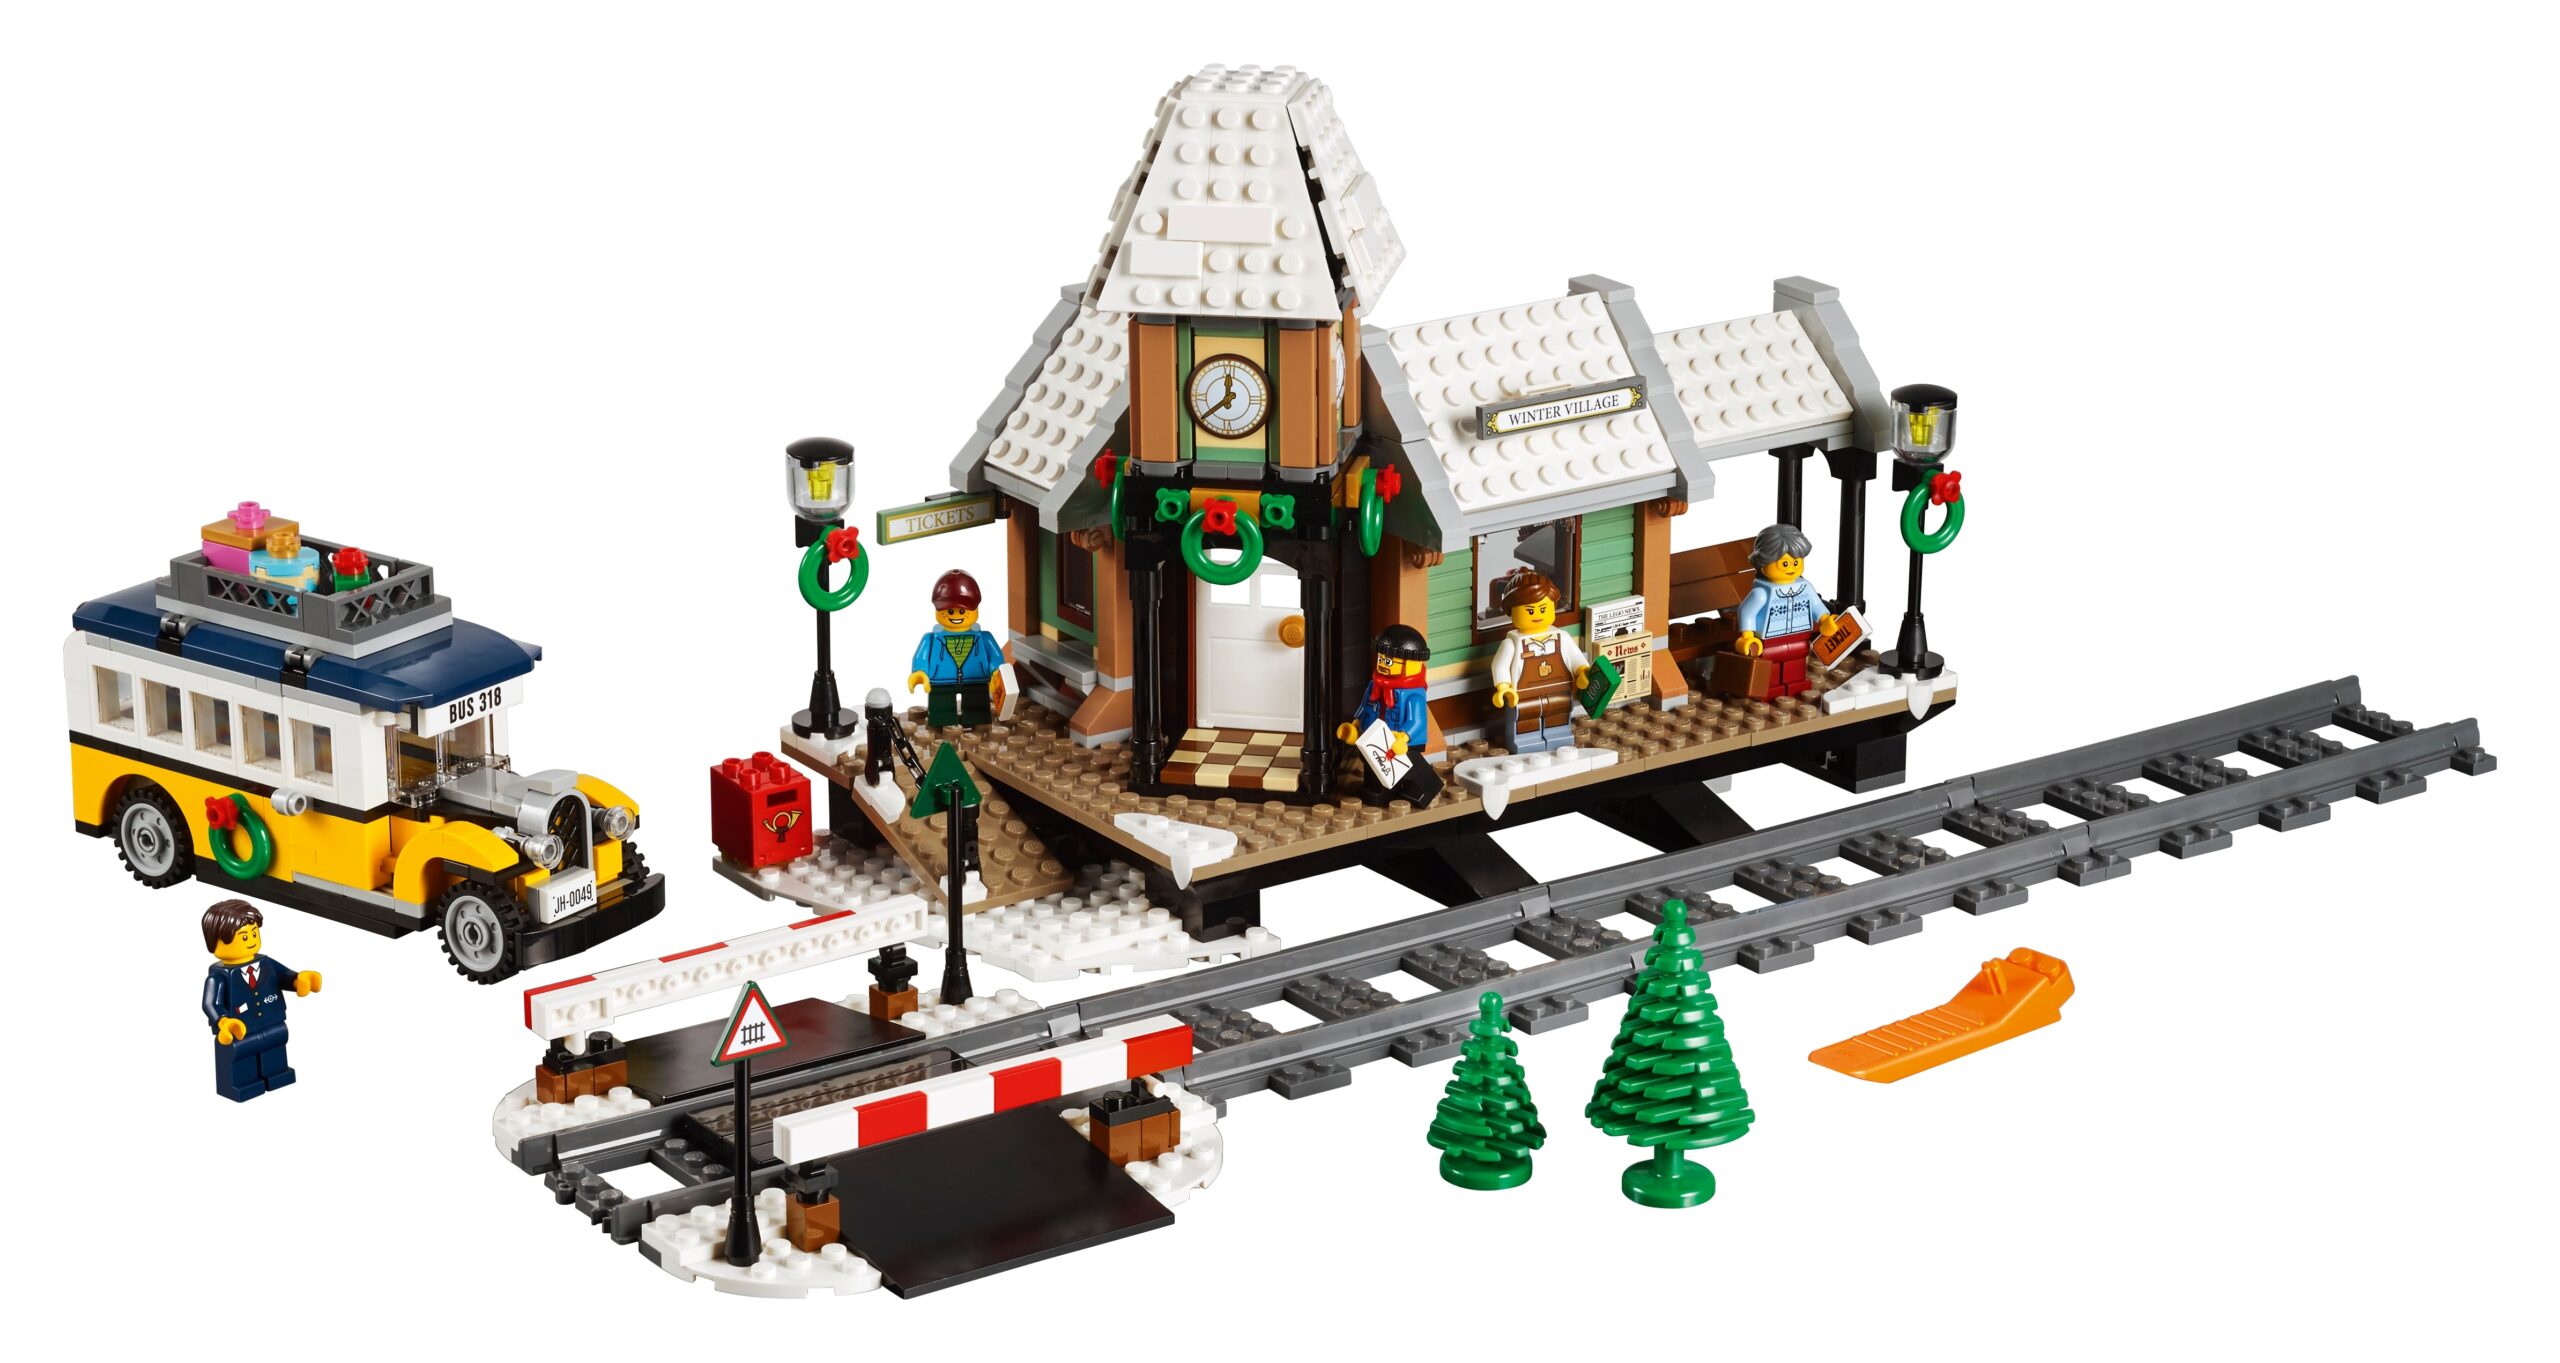 Lego Winter Village Sets - All 15! Updated for 2023 - Brick Land